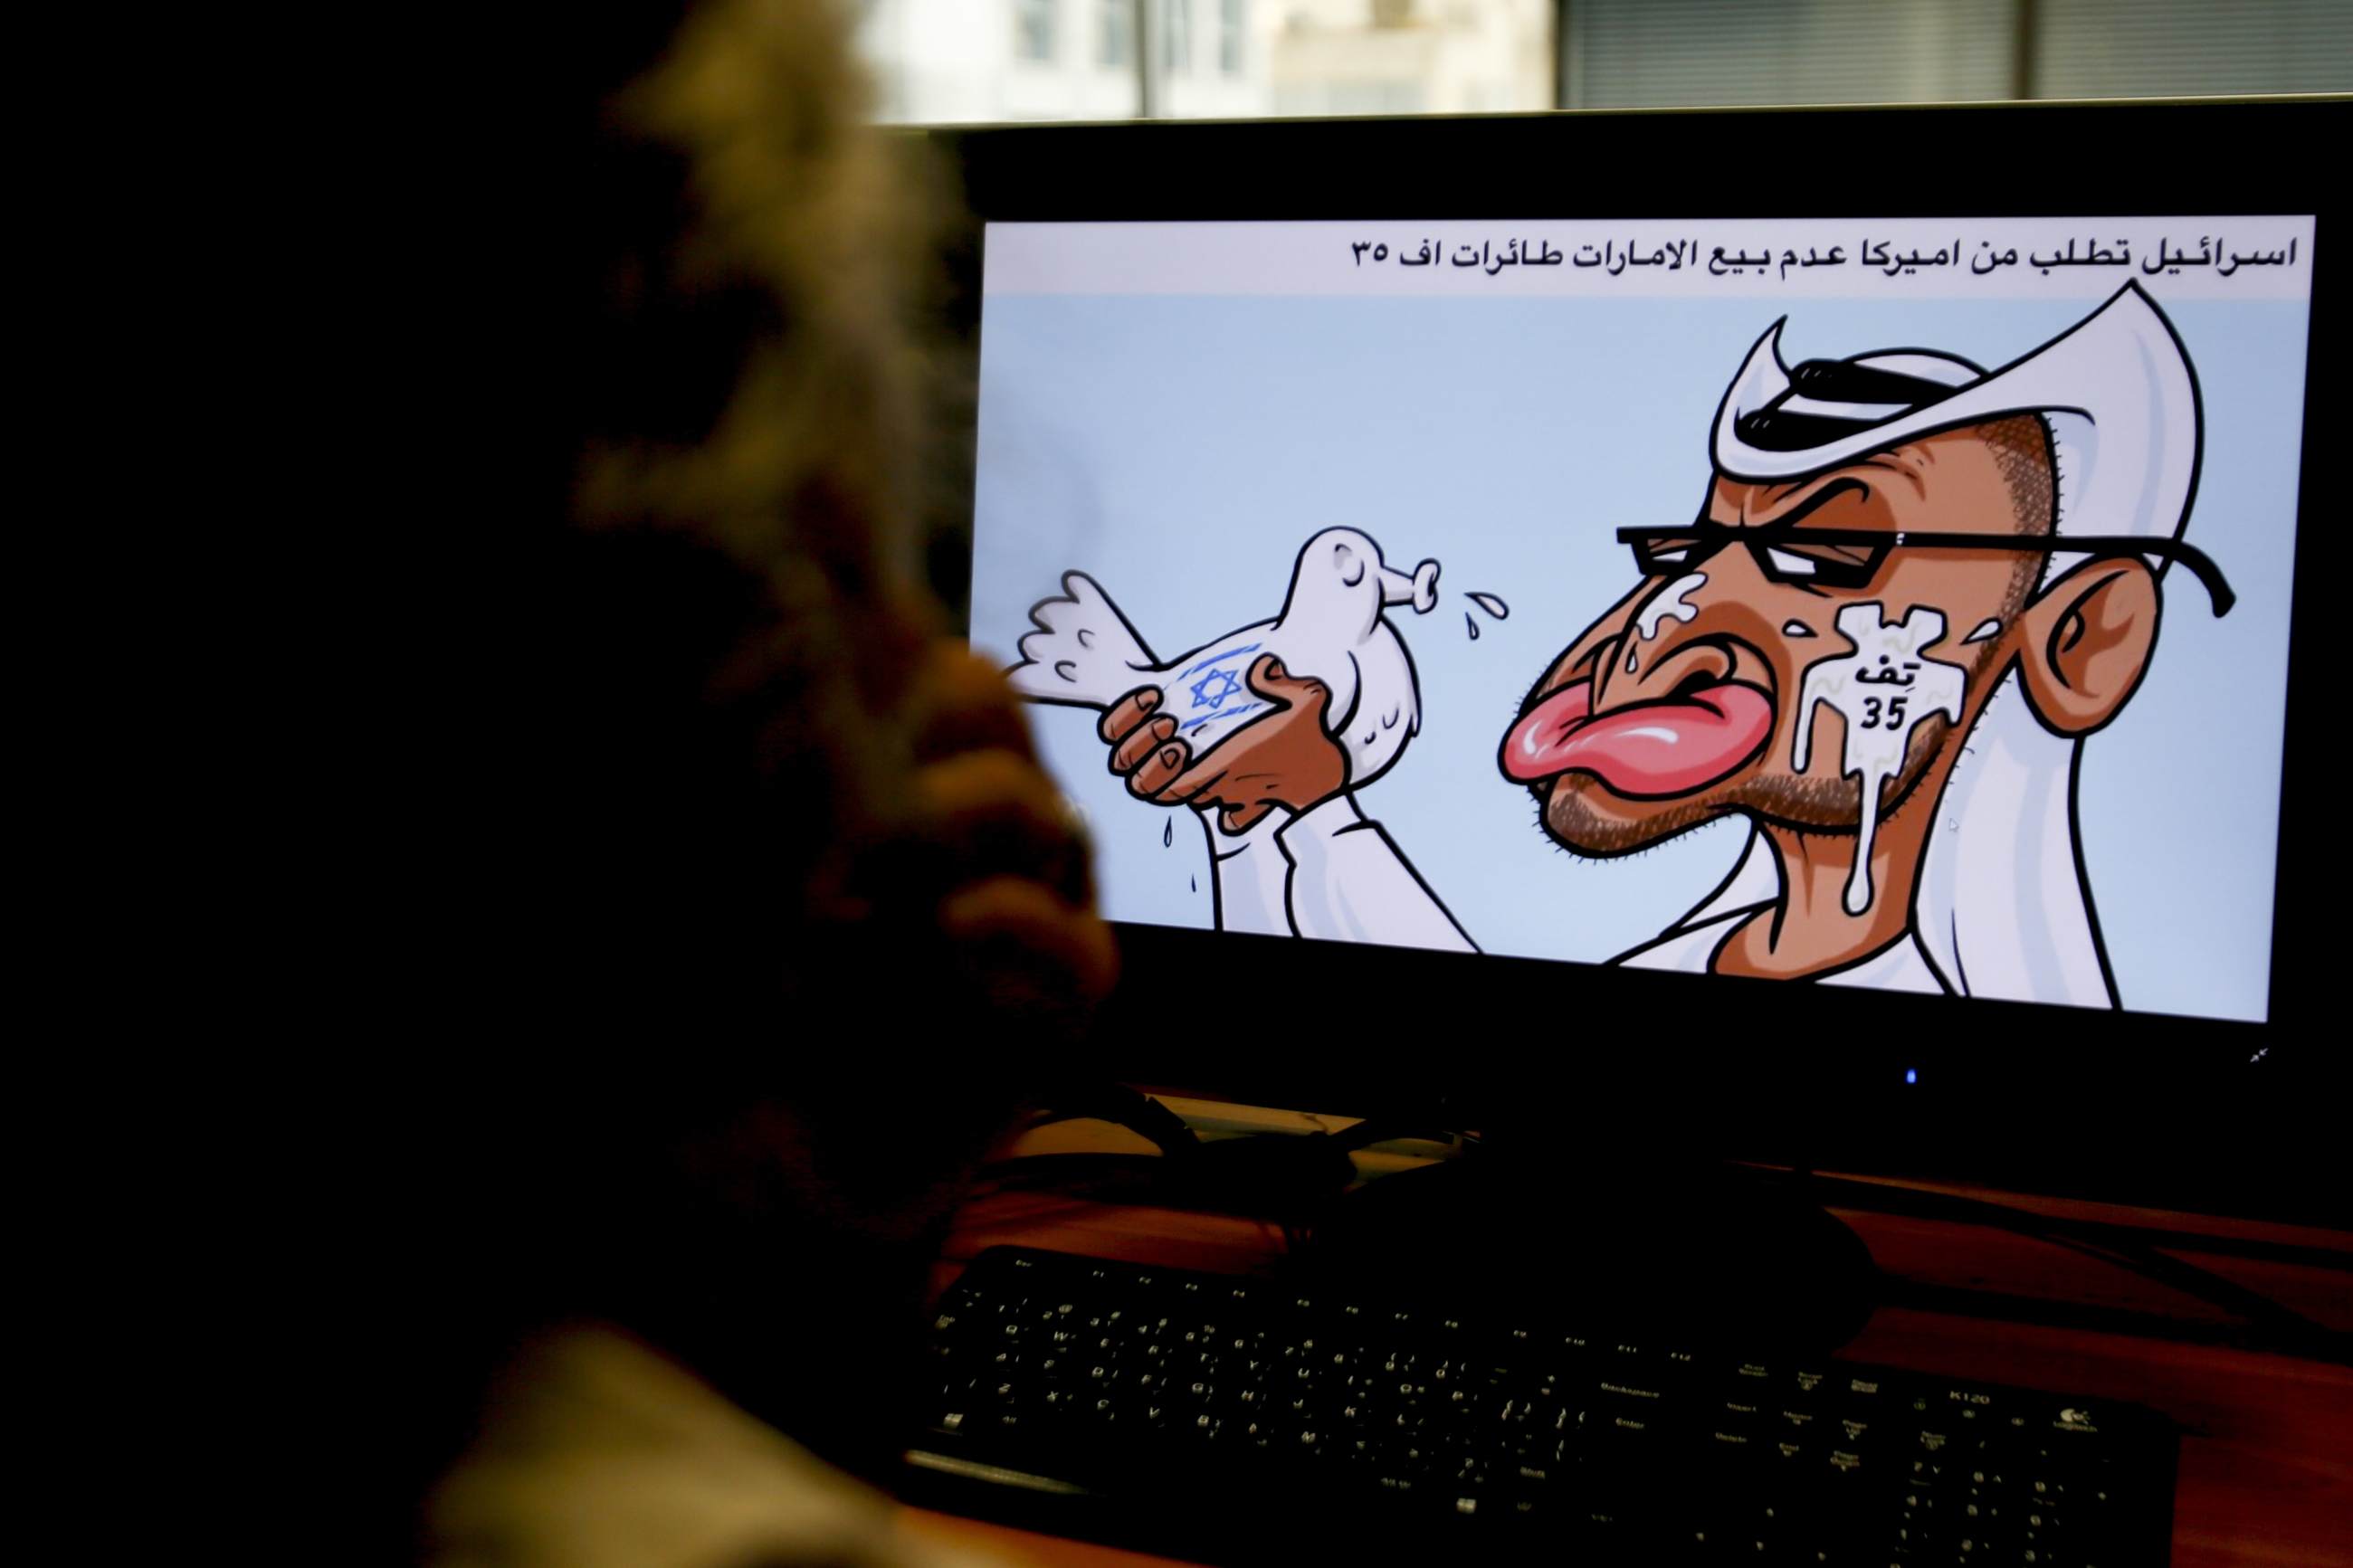 Emad Hajjaj's cartoon was published on Arabic news website Al-Araby al-Jadeed